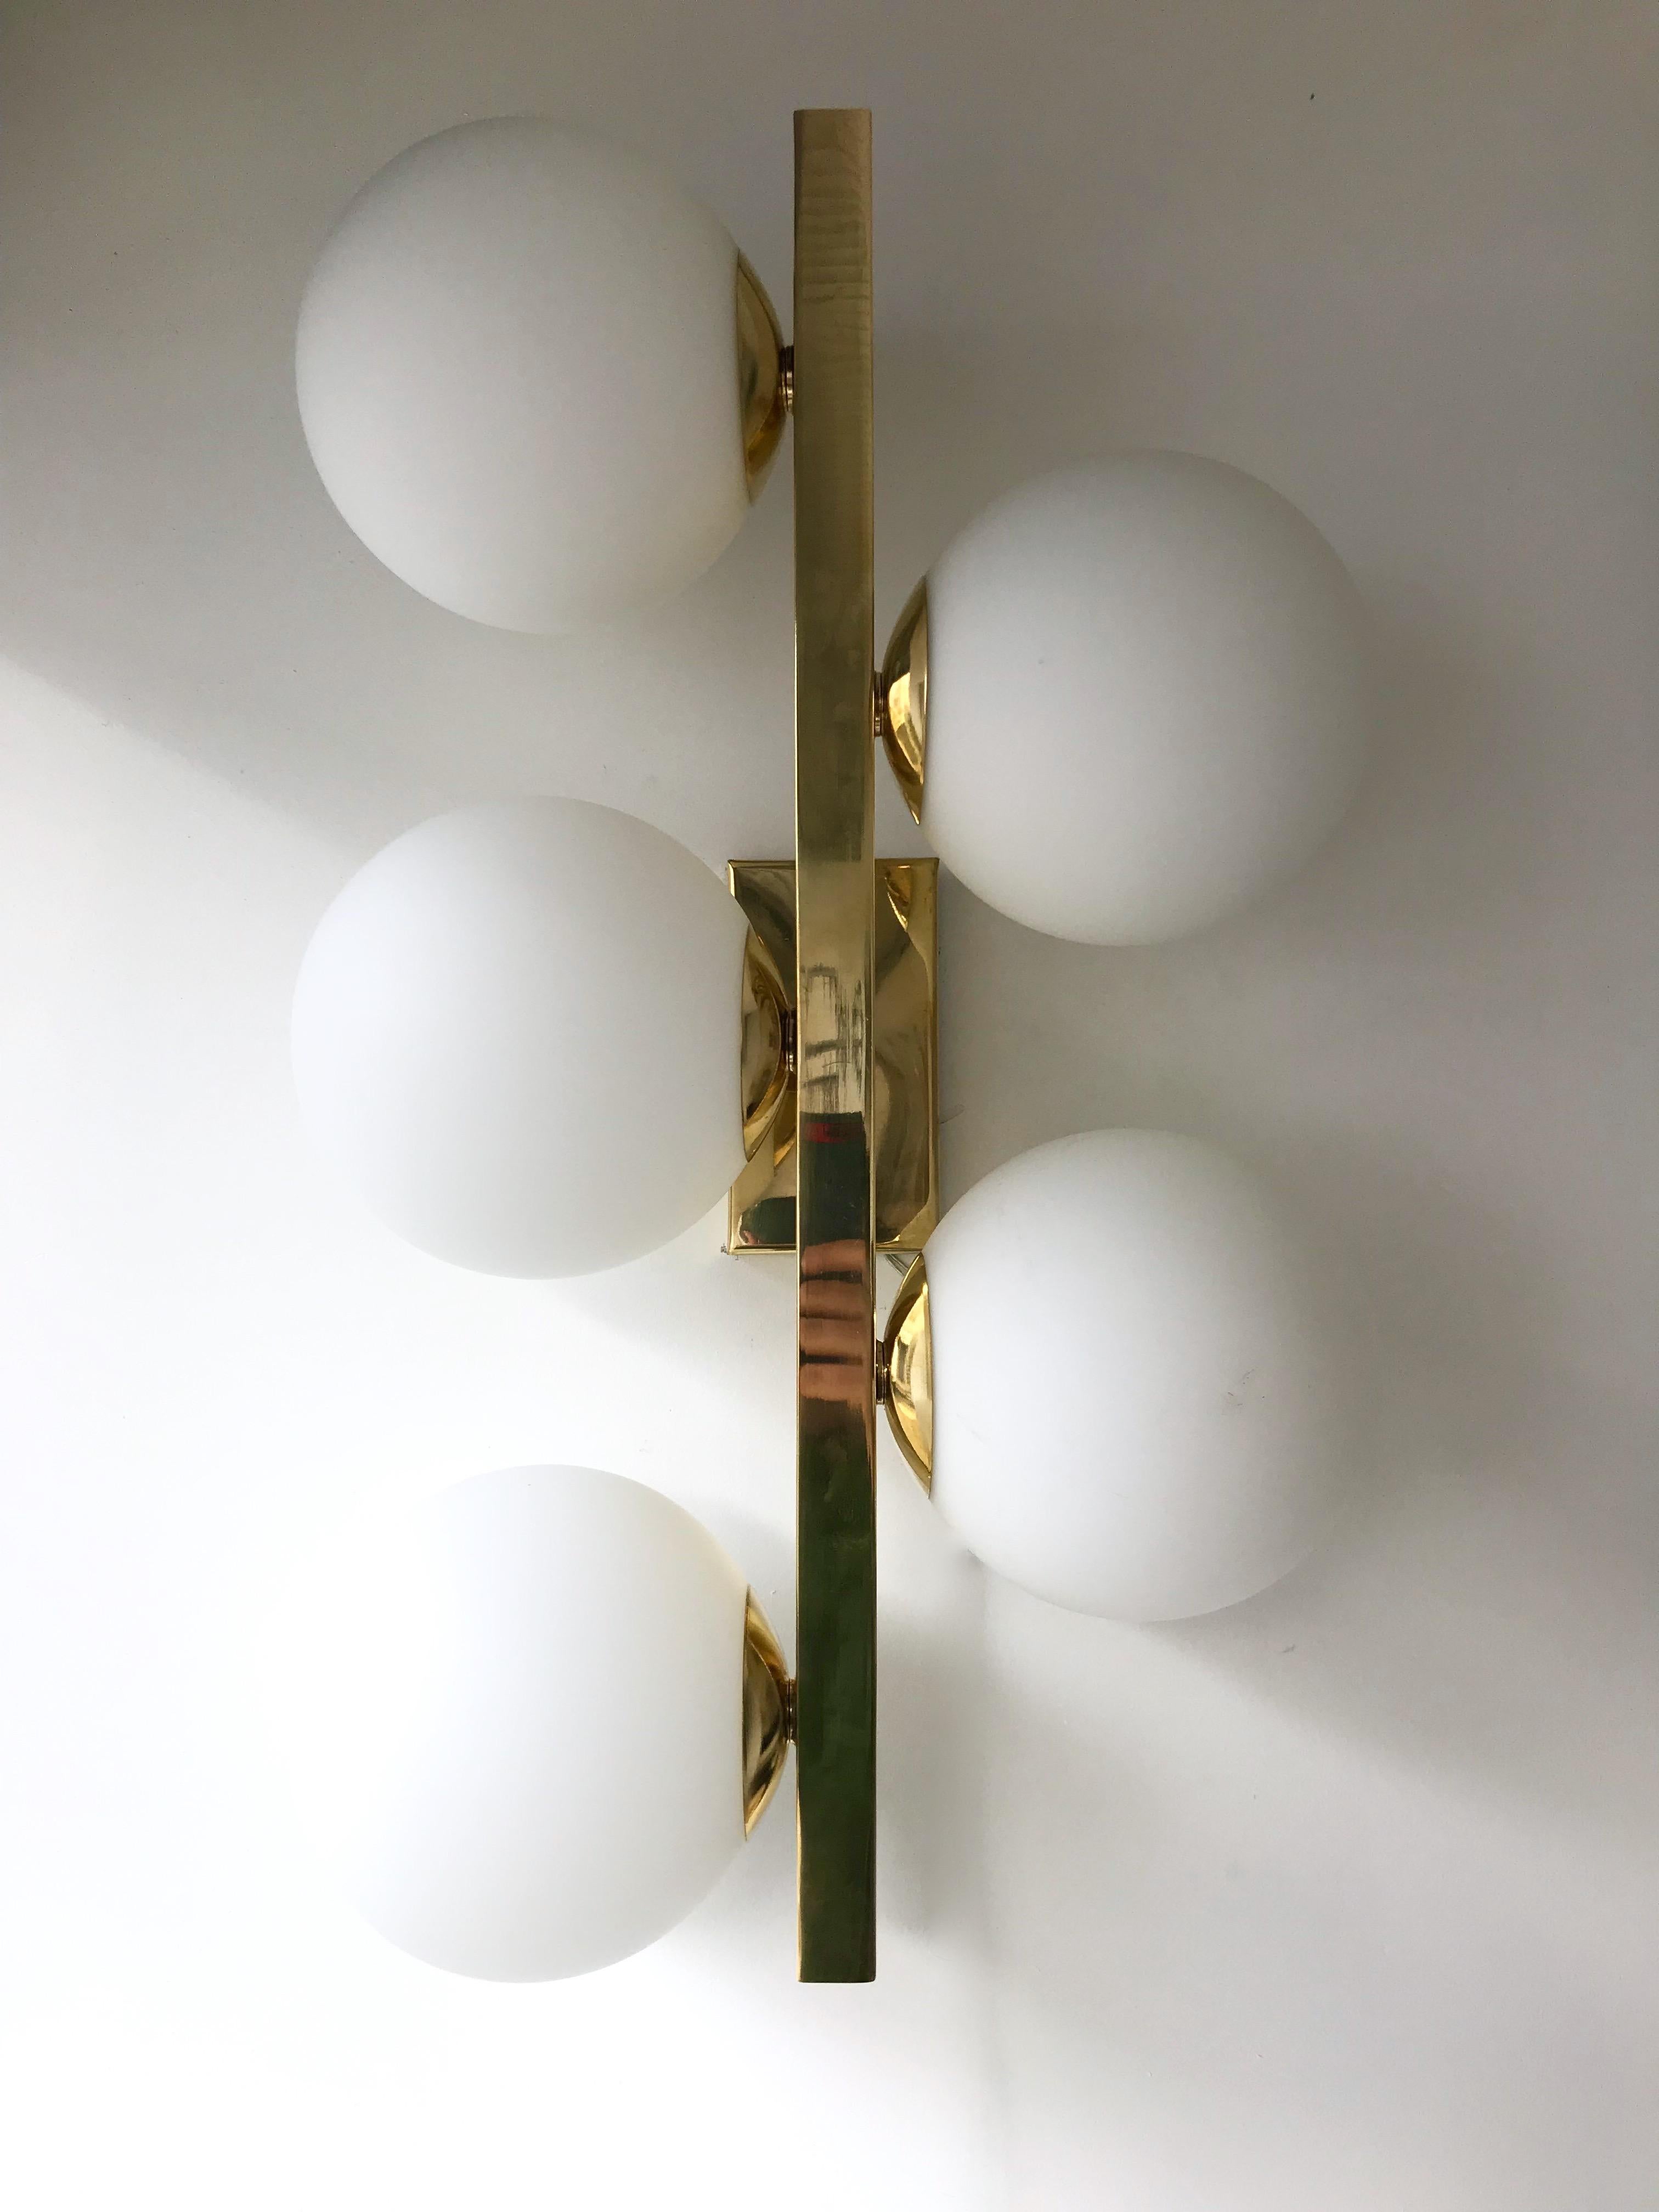 Contemporary gilt brass wall lights lamps sconces, blown Murano opaline glass ball. Few exclusive artisanal production from a small italian design workshop. In the style of Stilnovo, Lumi, La Murrina, Mazzega, Aldo Carlo Nason.